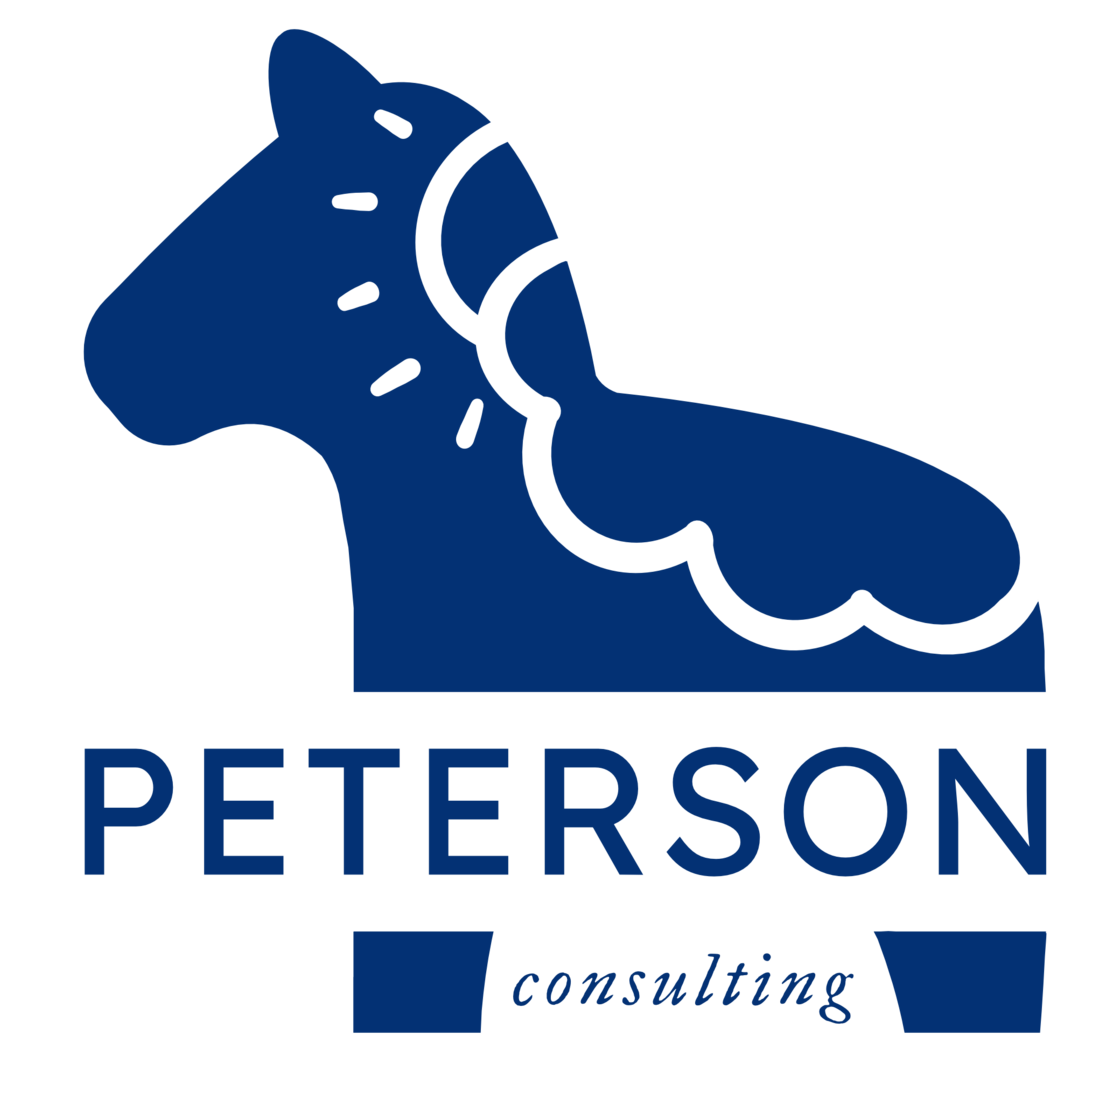 PCG Logo Peterson Consulting Short Legs